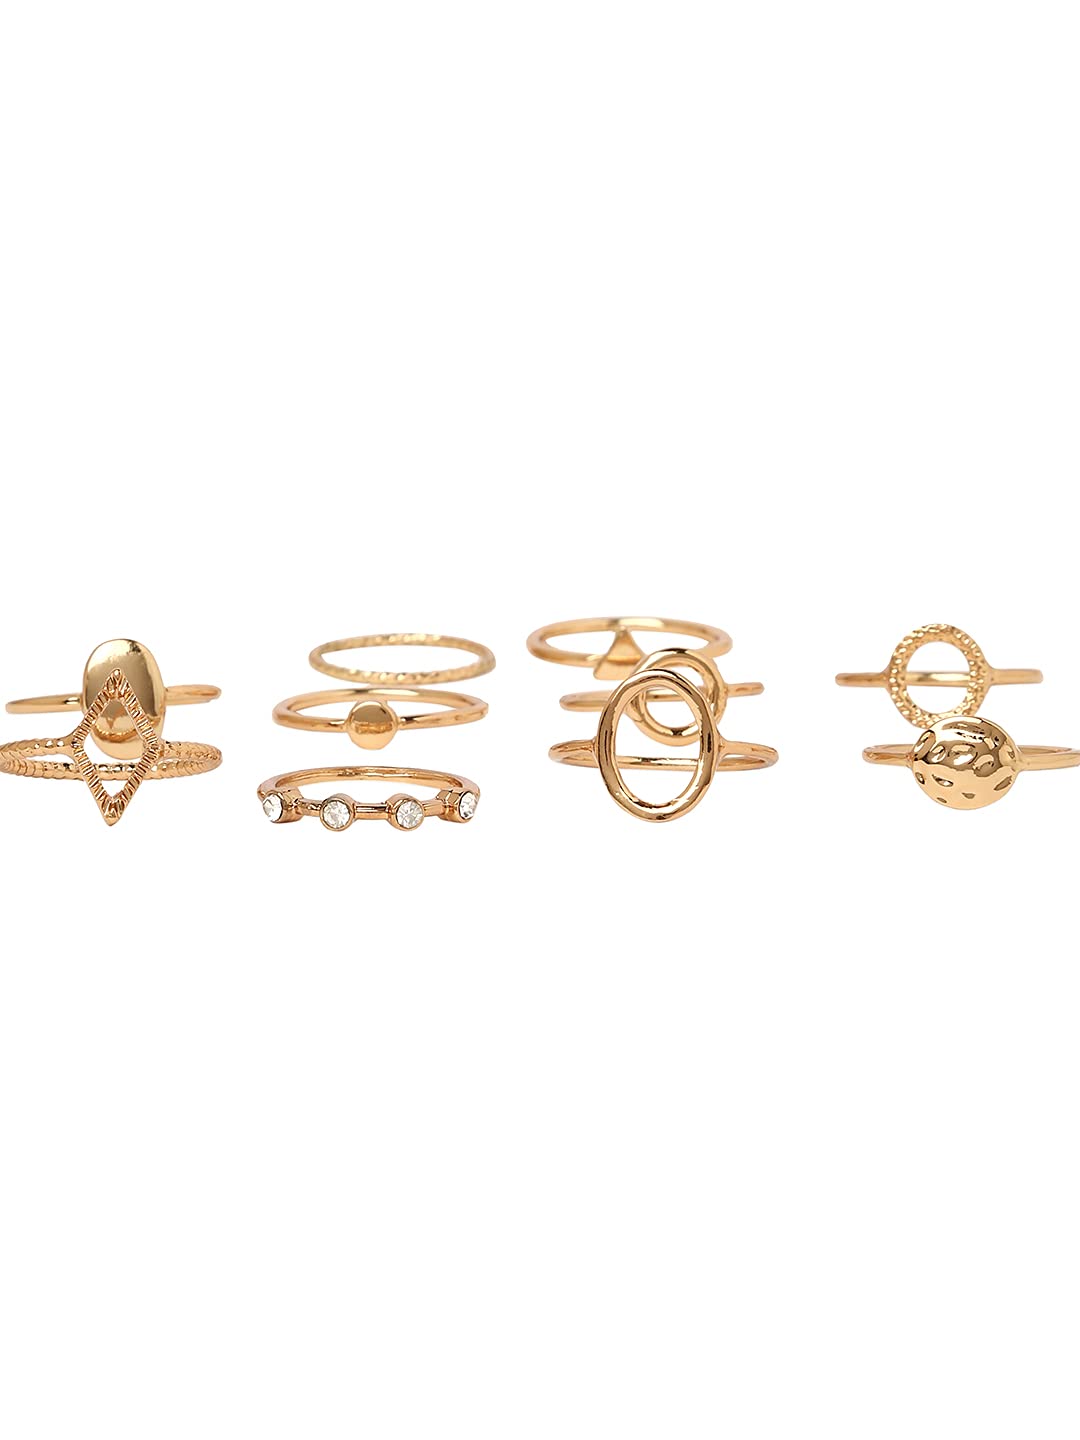 Zaveri Pearls Gold Tone Set Of 10 Stunning Stackable Finger Rings-ZPFK10876